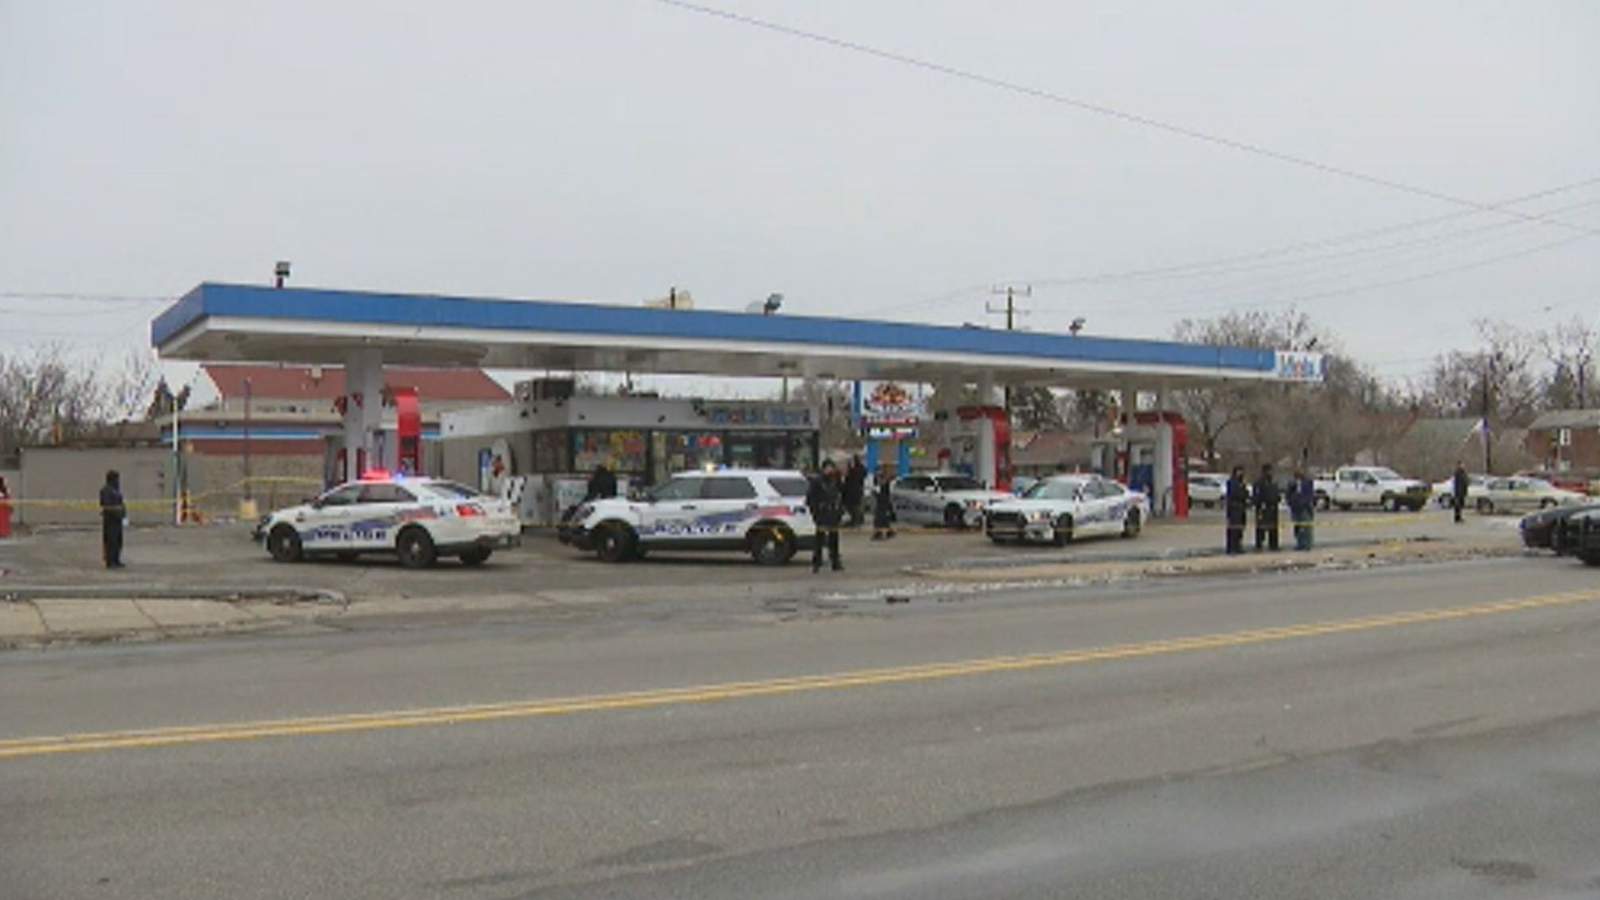 Gunman murders random person at Detroit gas station before killing himself, police say